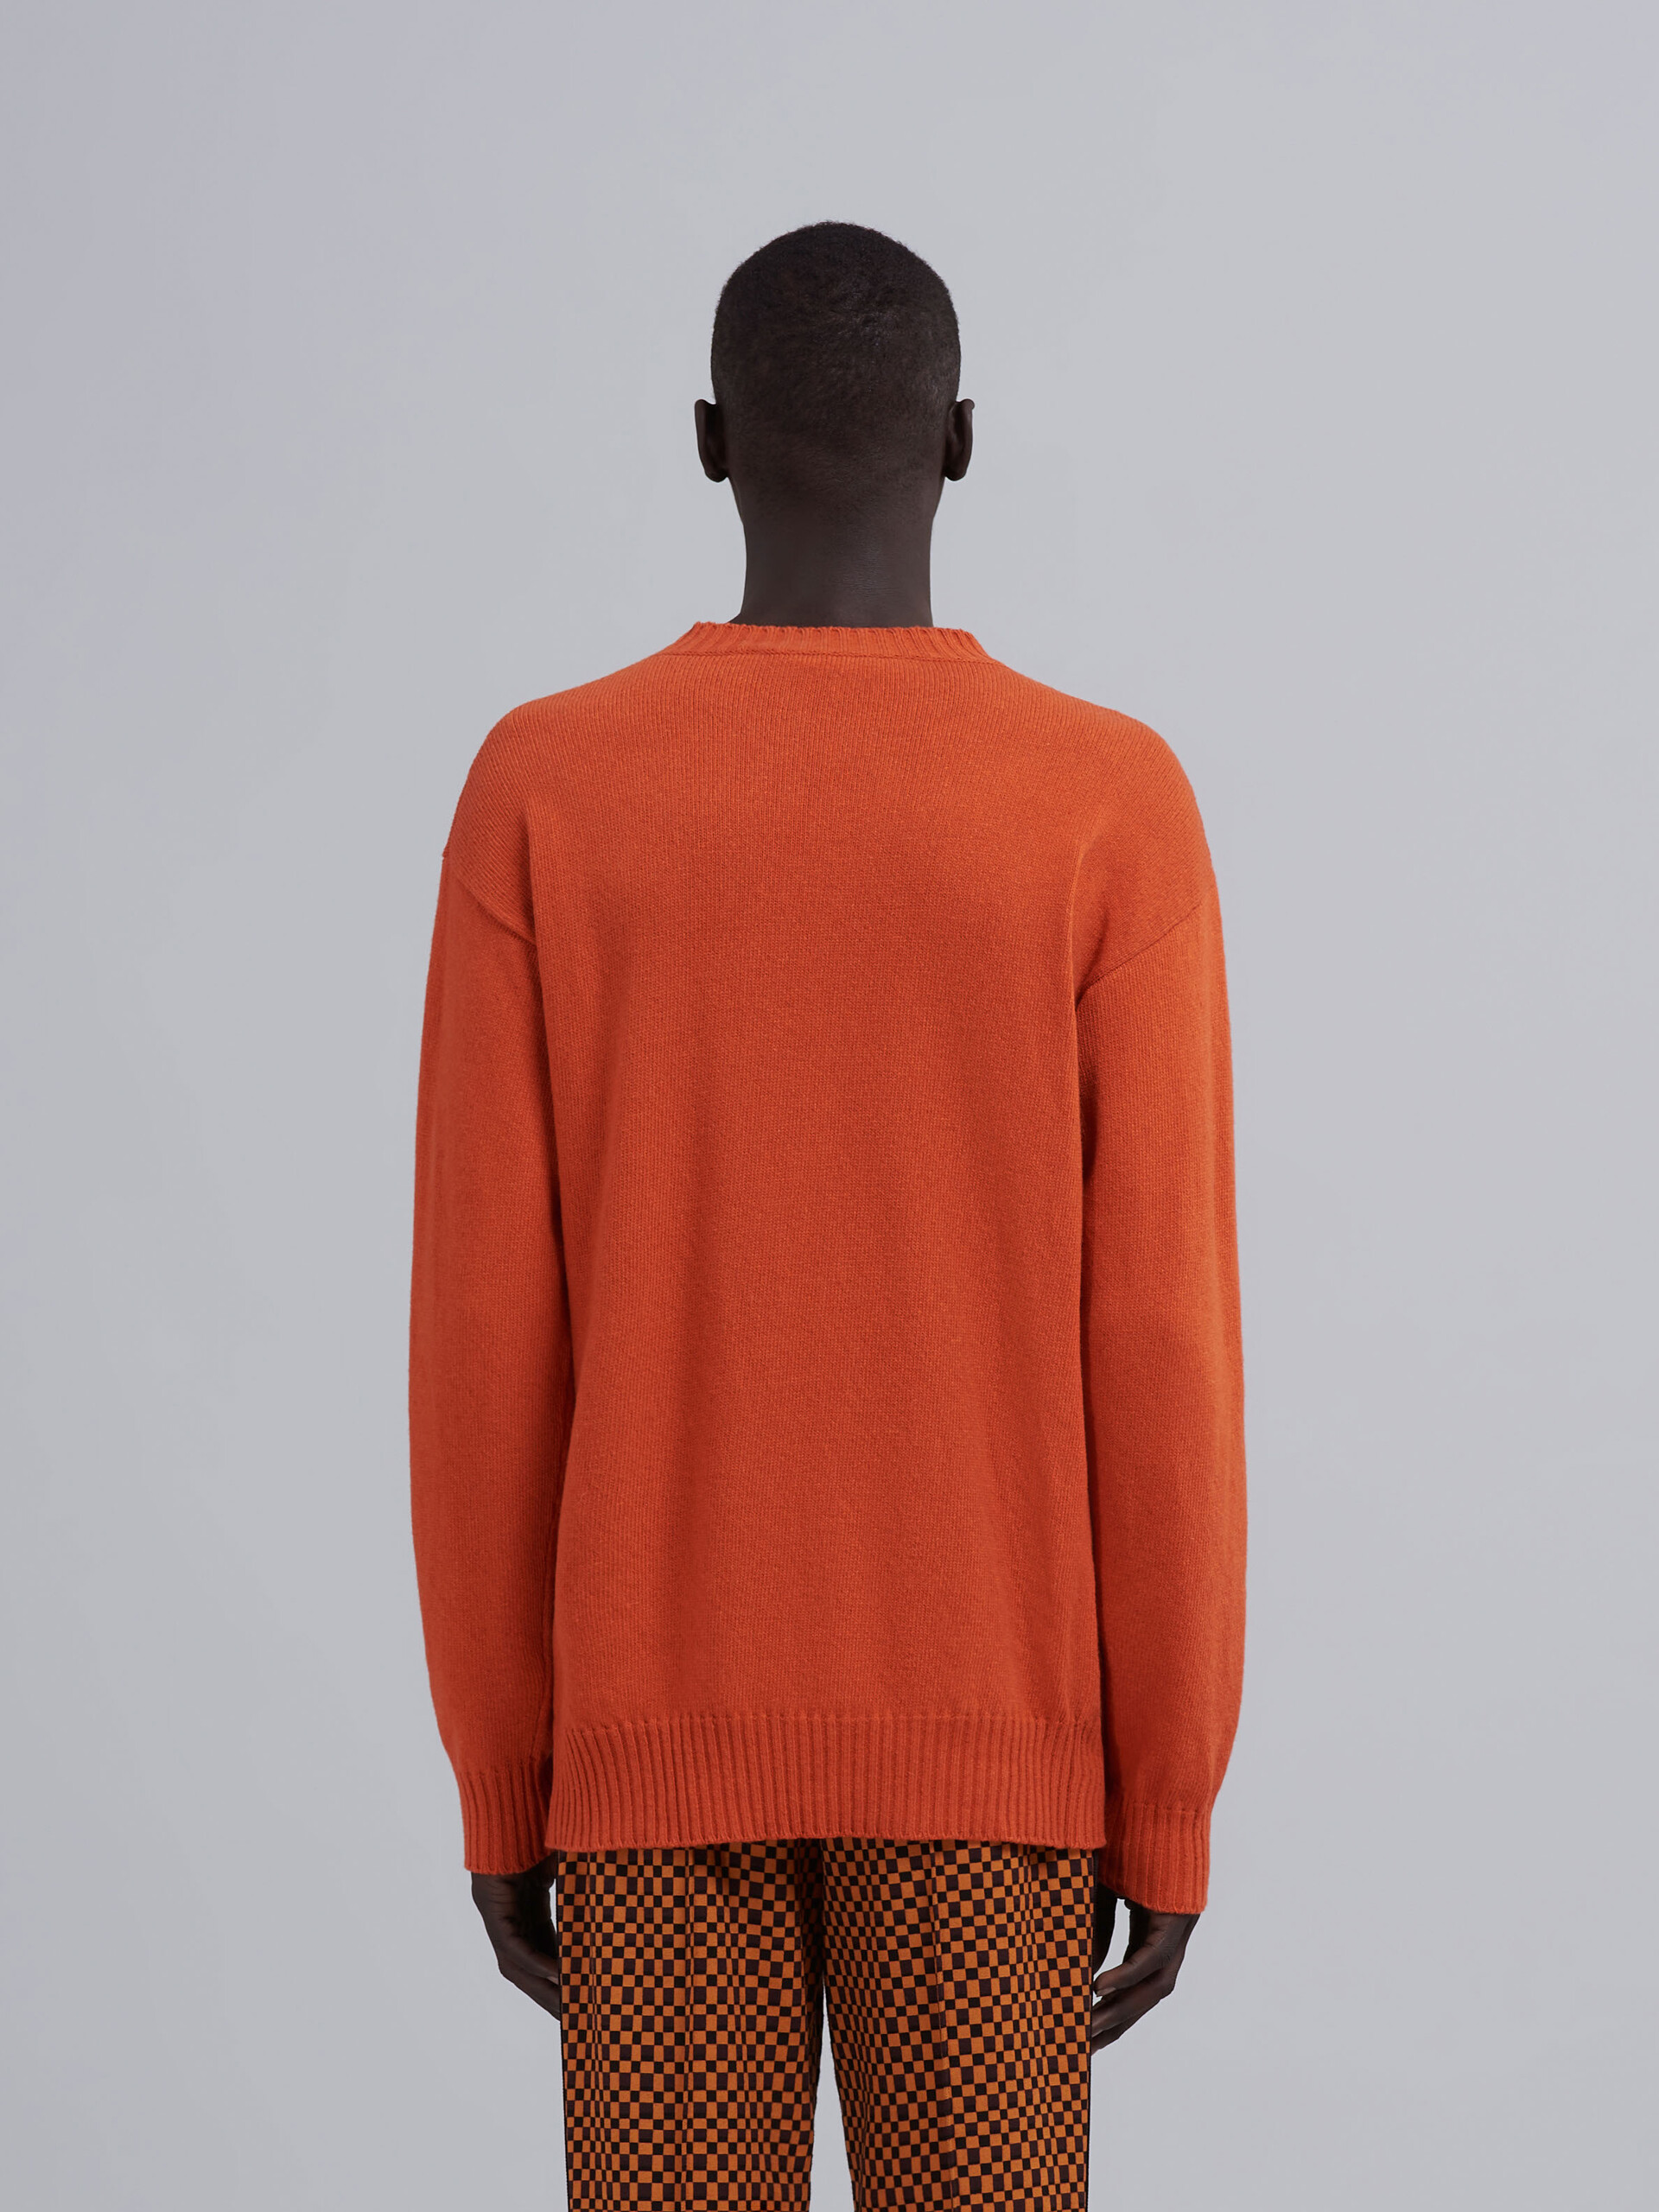 Orange cashmere sweater - Pullovers - Image 3